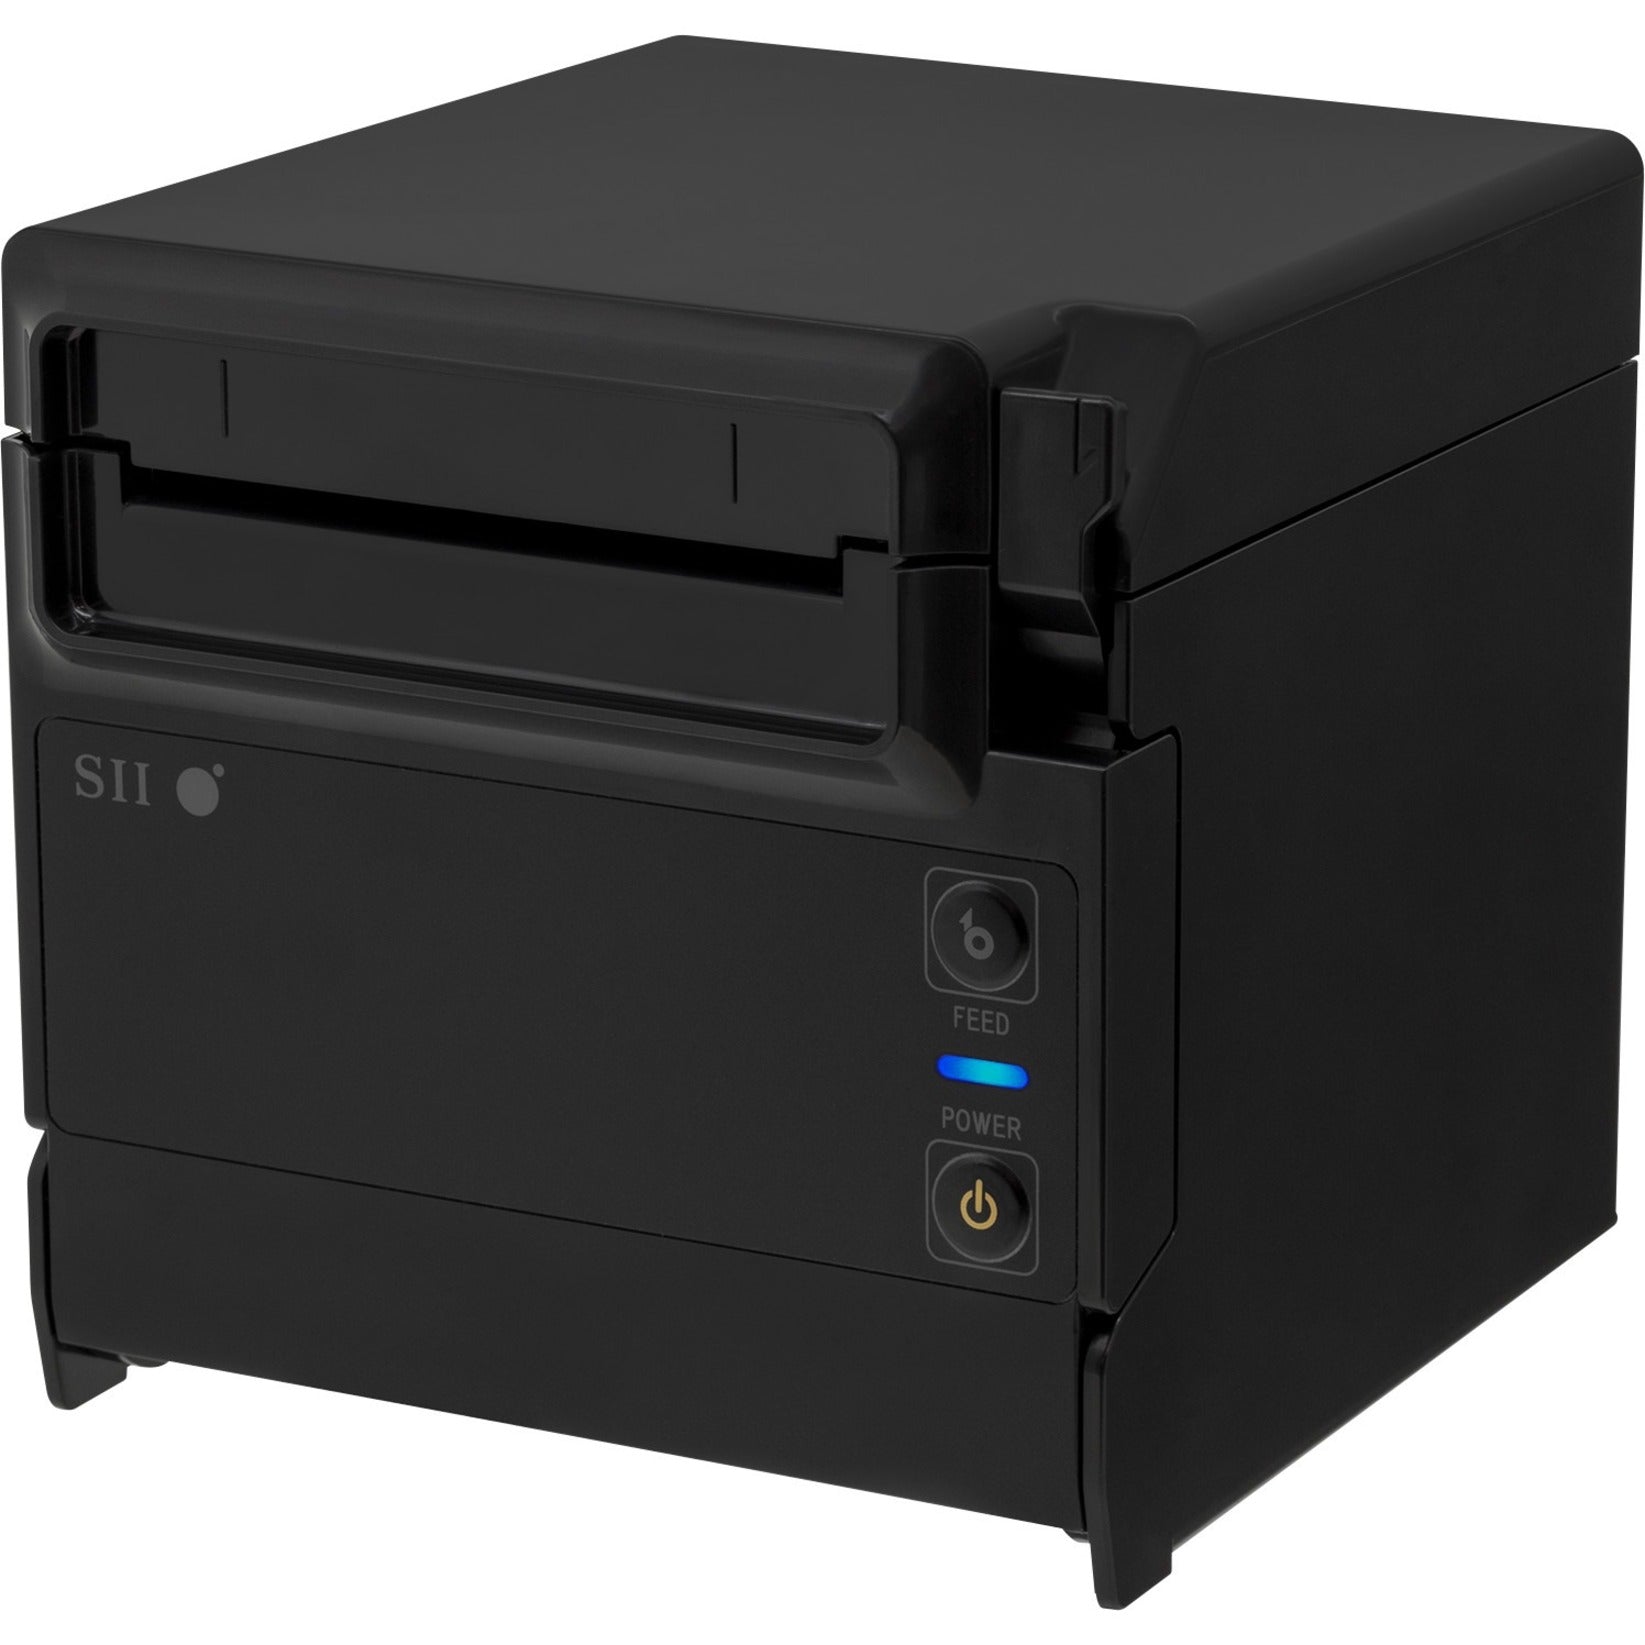 Seiko RP-F10-K27J1-44C3 RP-F10 Series Direct Thermal Printer, Compact, 9.84 in/s Print Speed, Monochrome, 203dpi